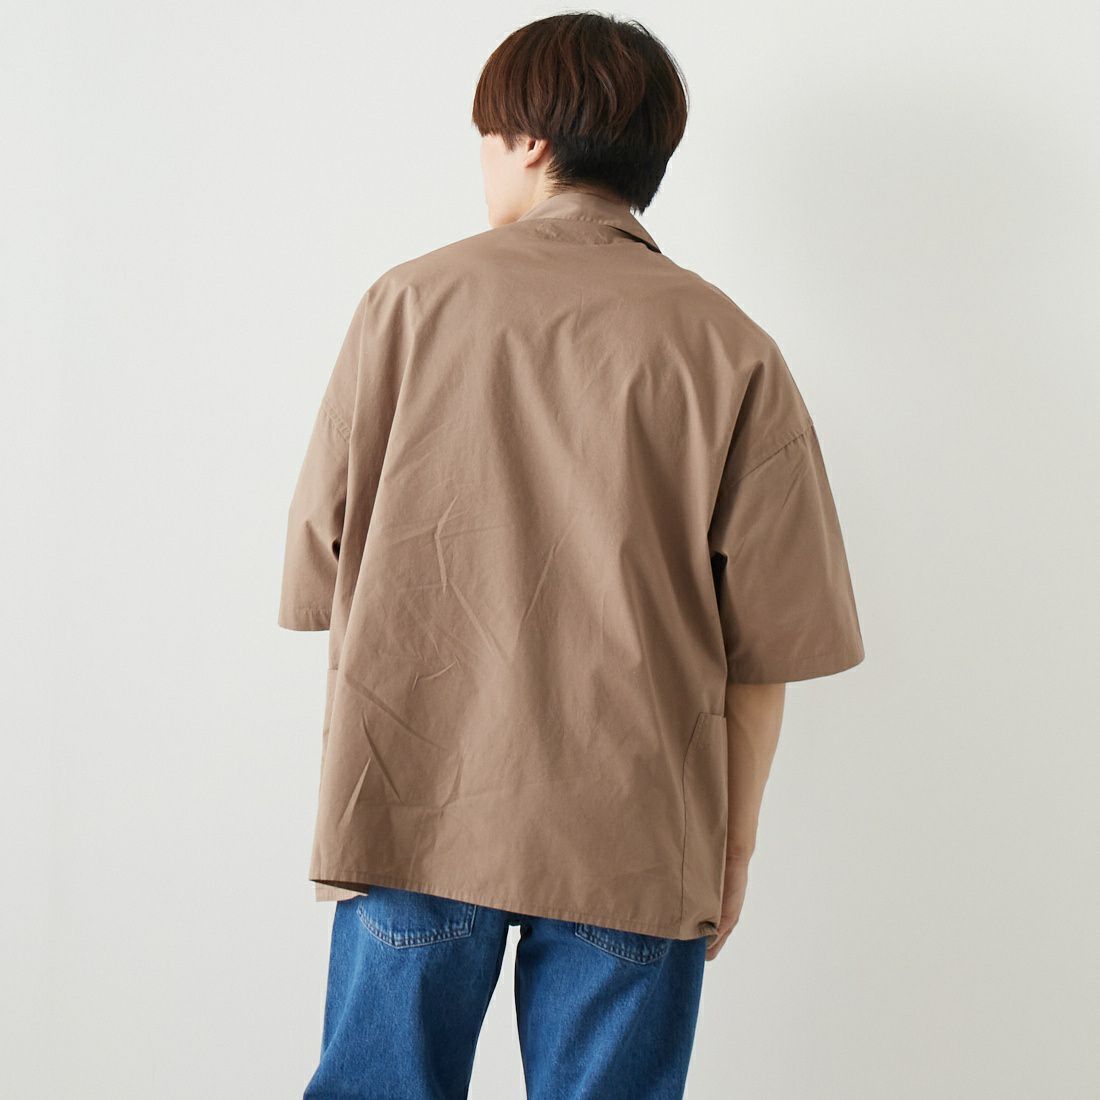 Noir Fabrik [ヌワールファブリック] ショートスリーブガーデニングシャツ [BPP480] BEIGE &&モデル身長：169cm 着用サイズ：M&&